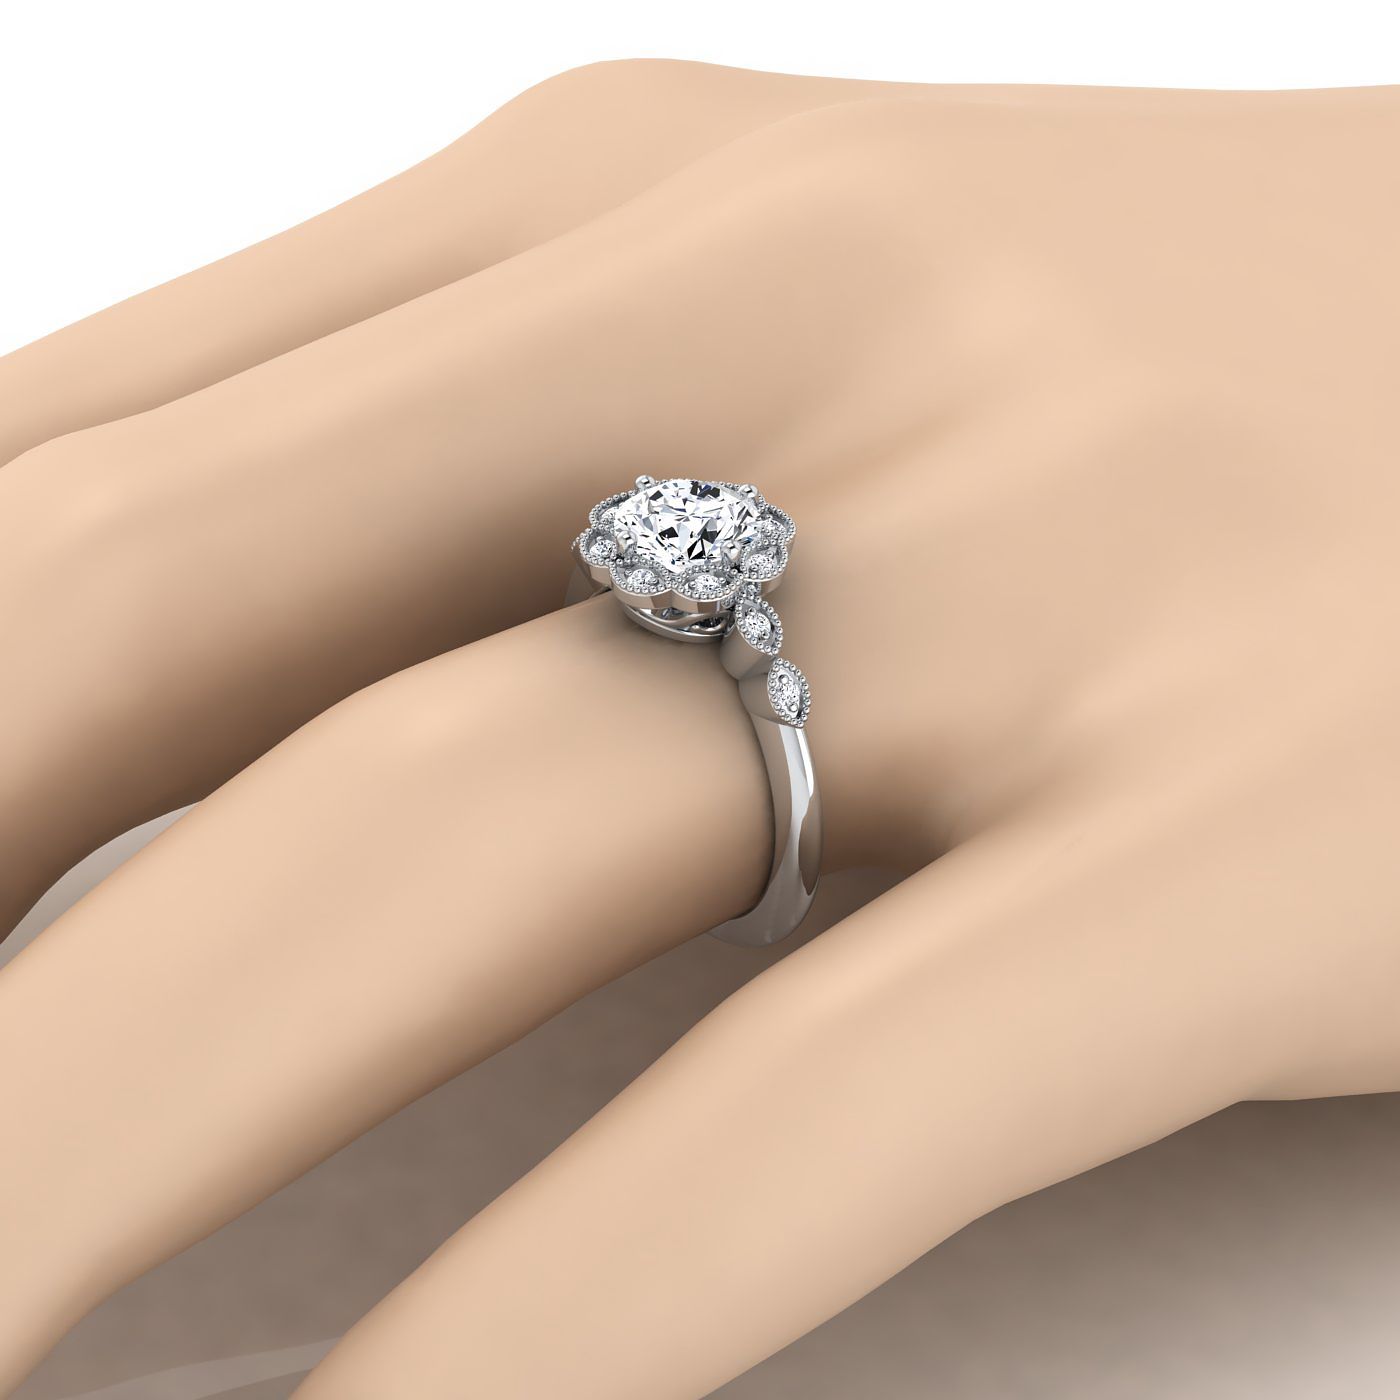 14K White Gold Round Brilliant Garnet Ornate Diamond Halo Vintage Inspired Engagement Ring -1/3ctw